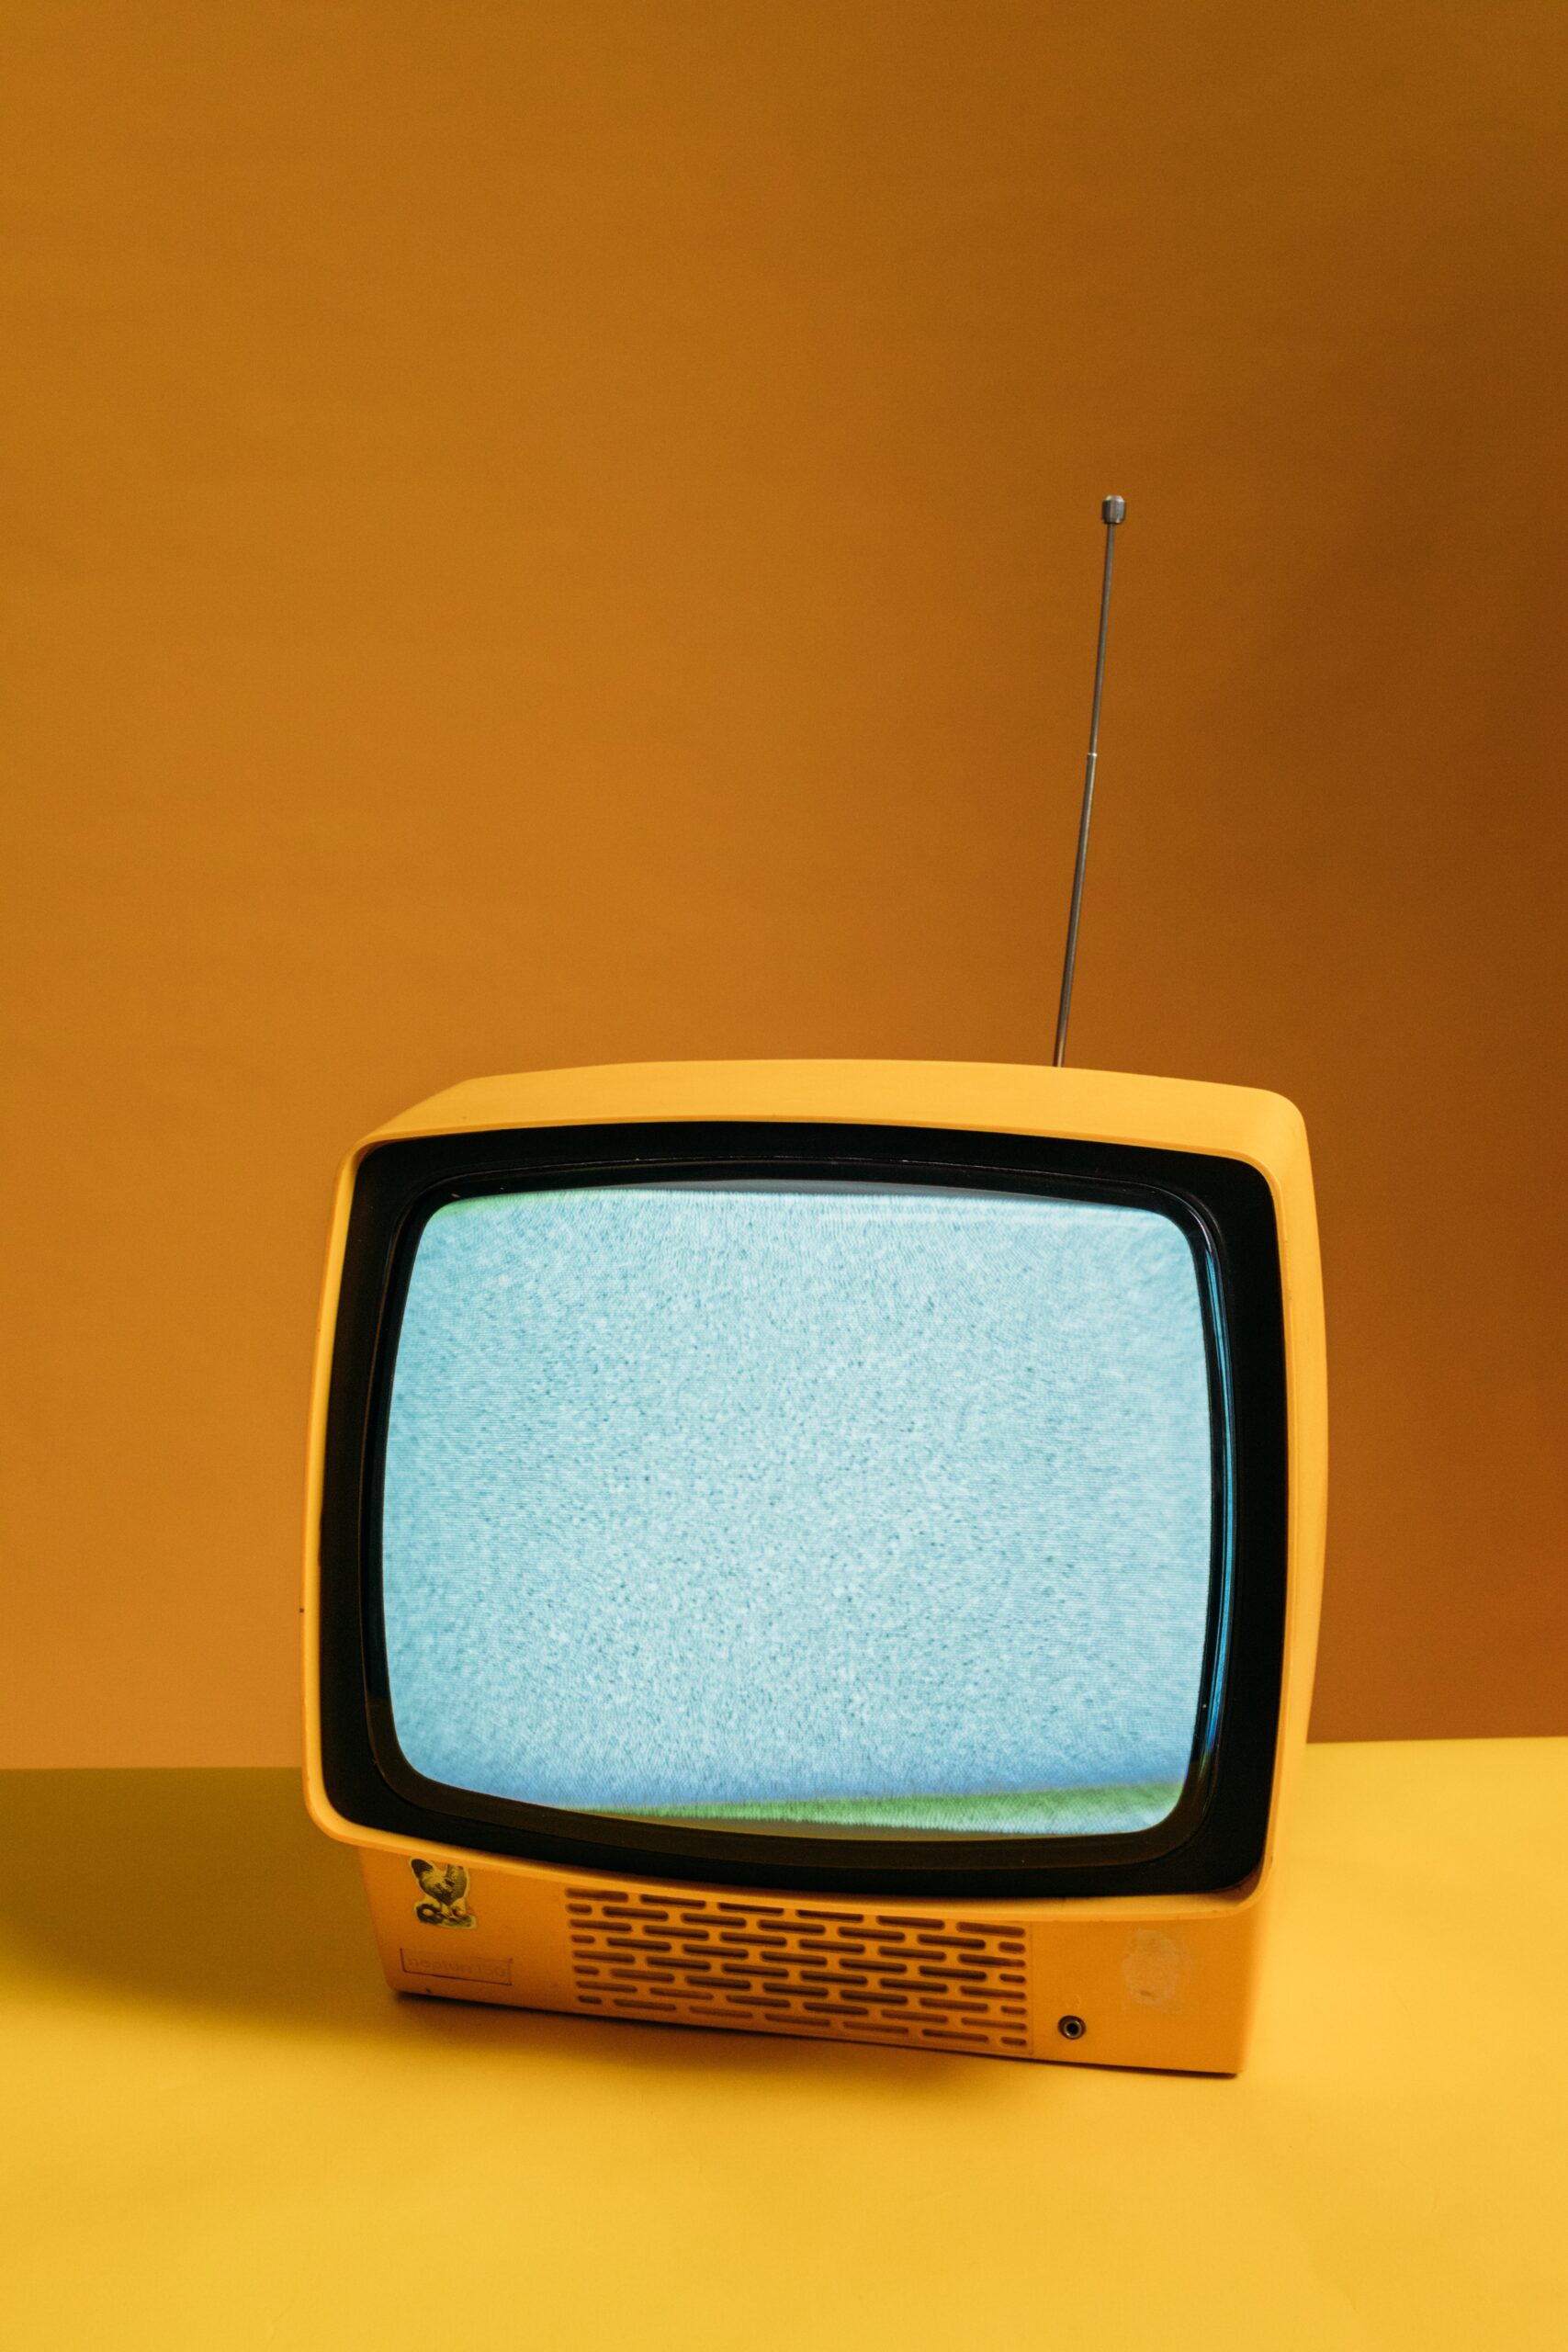 Sad old traditional TV